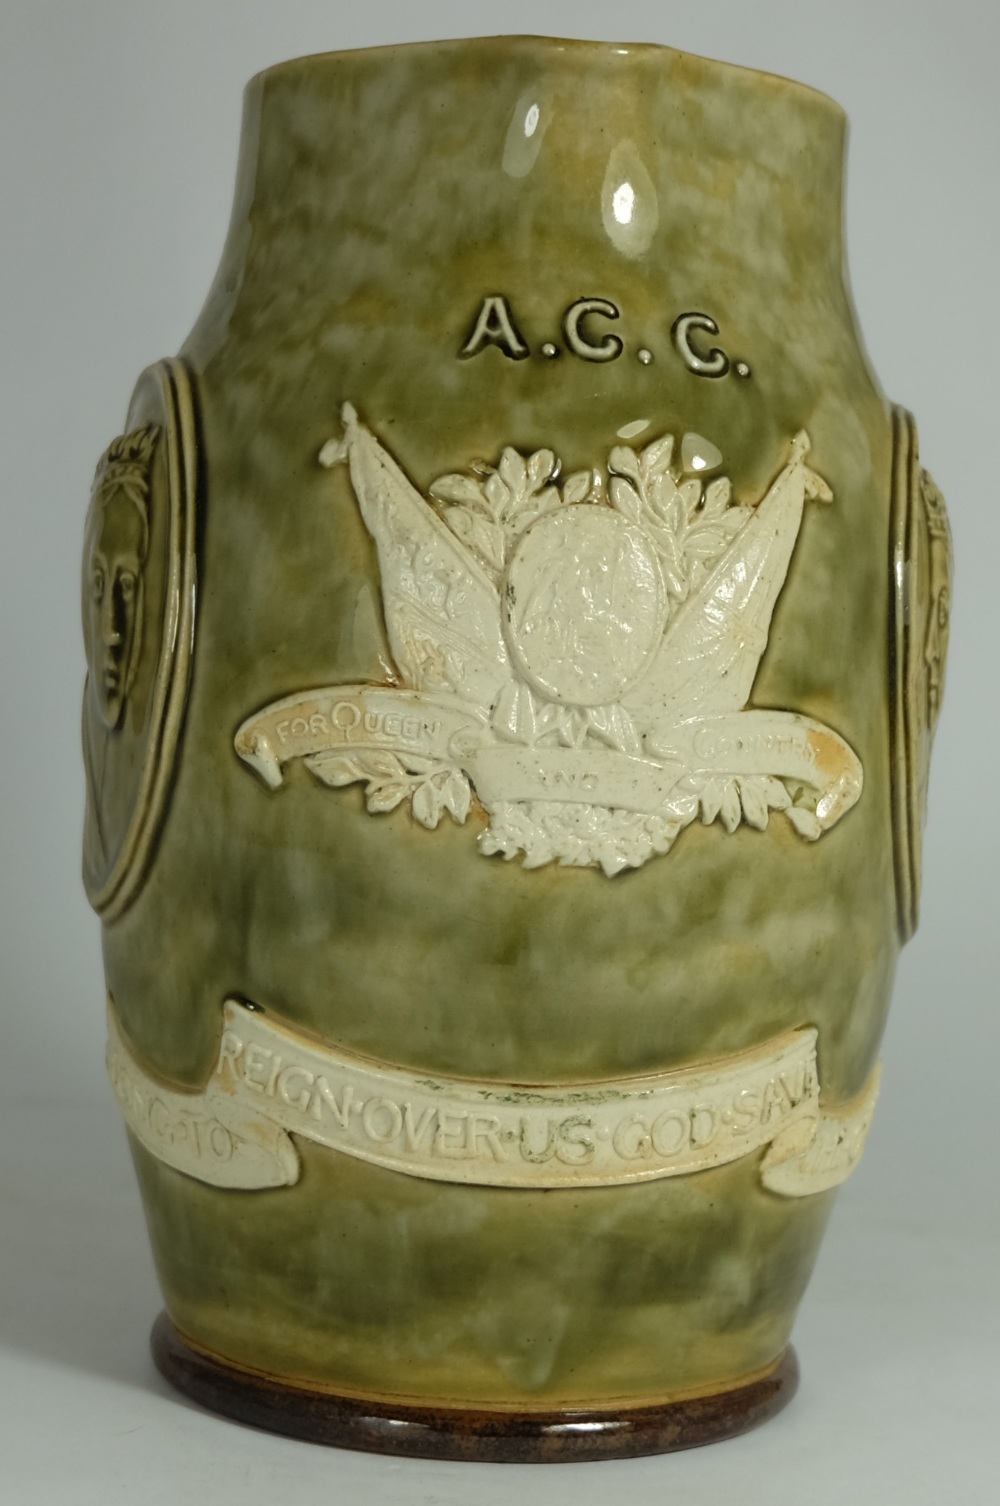 Royal Doulton Lambeth Stoneware Sage Green Commemorative Jug Queen Victoria ACC 1837-1897 Height